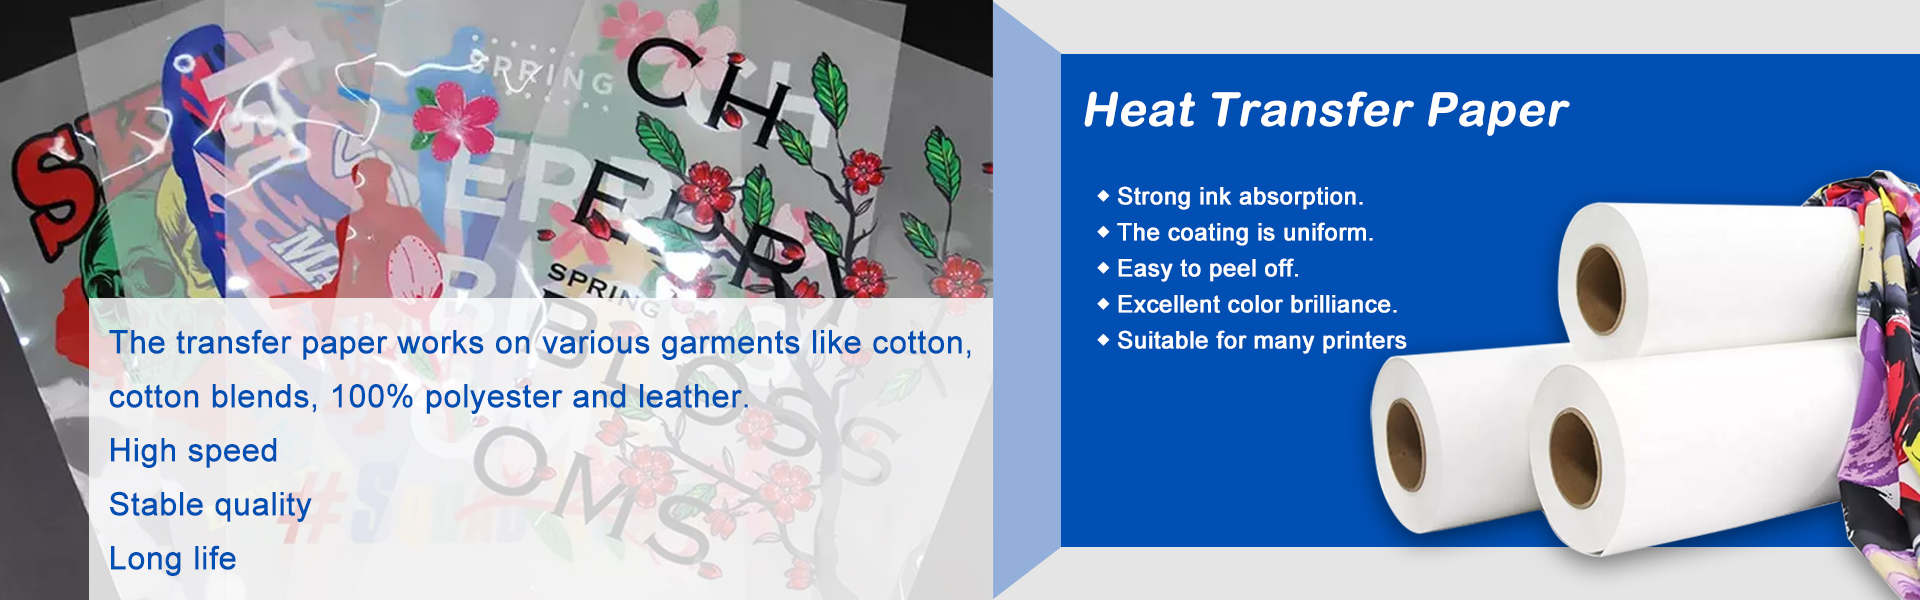 Wärmeübertragungspapier, Sublimationspapier, digitales Druckerpapier,Suzhou Huarong Paper Products Co., Ltd